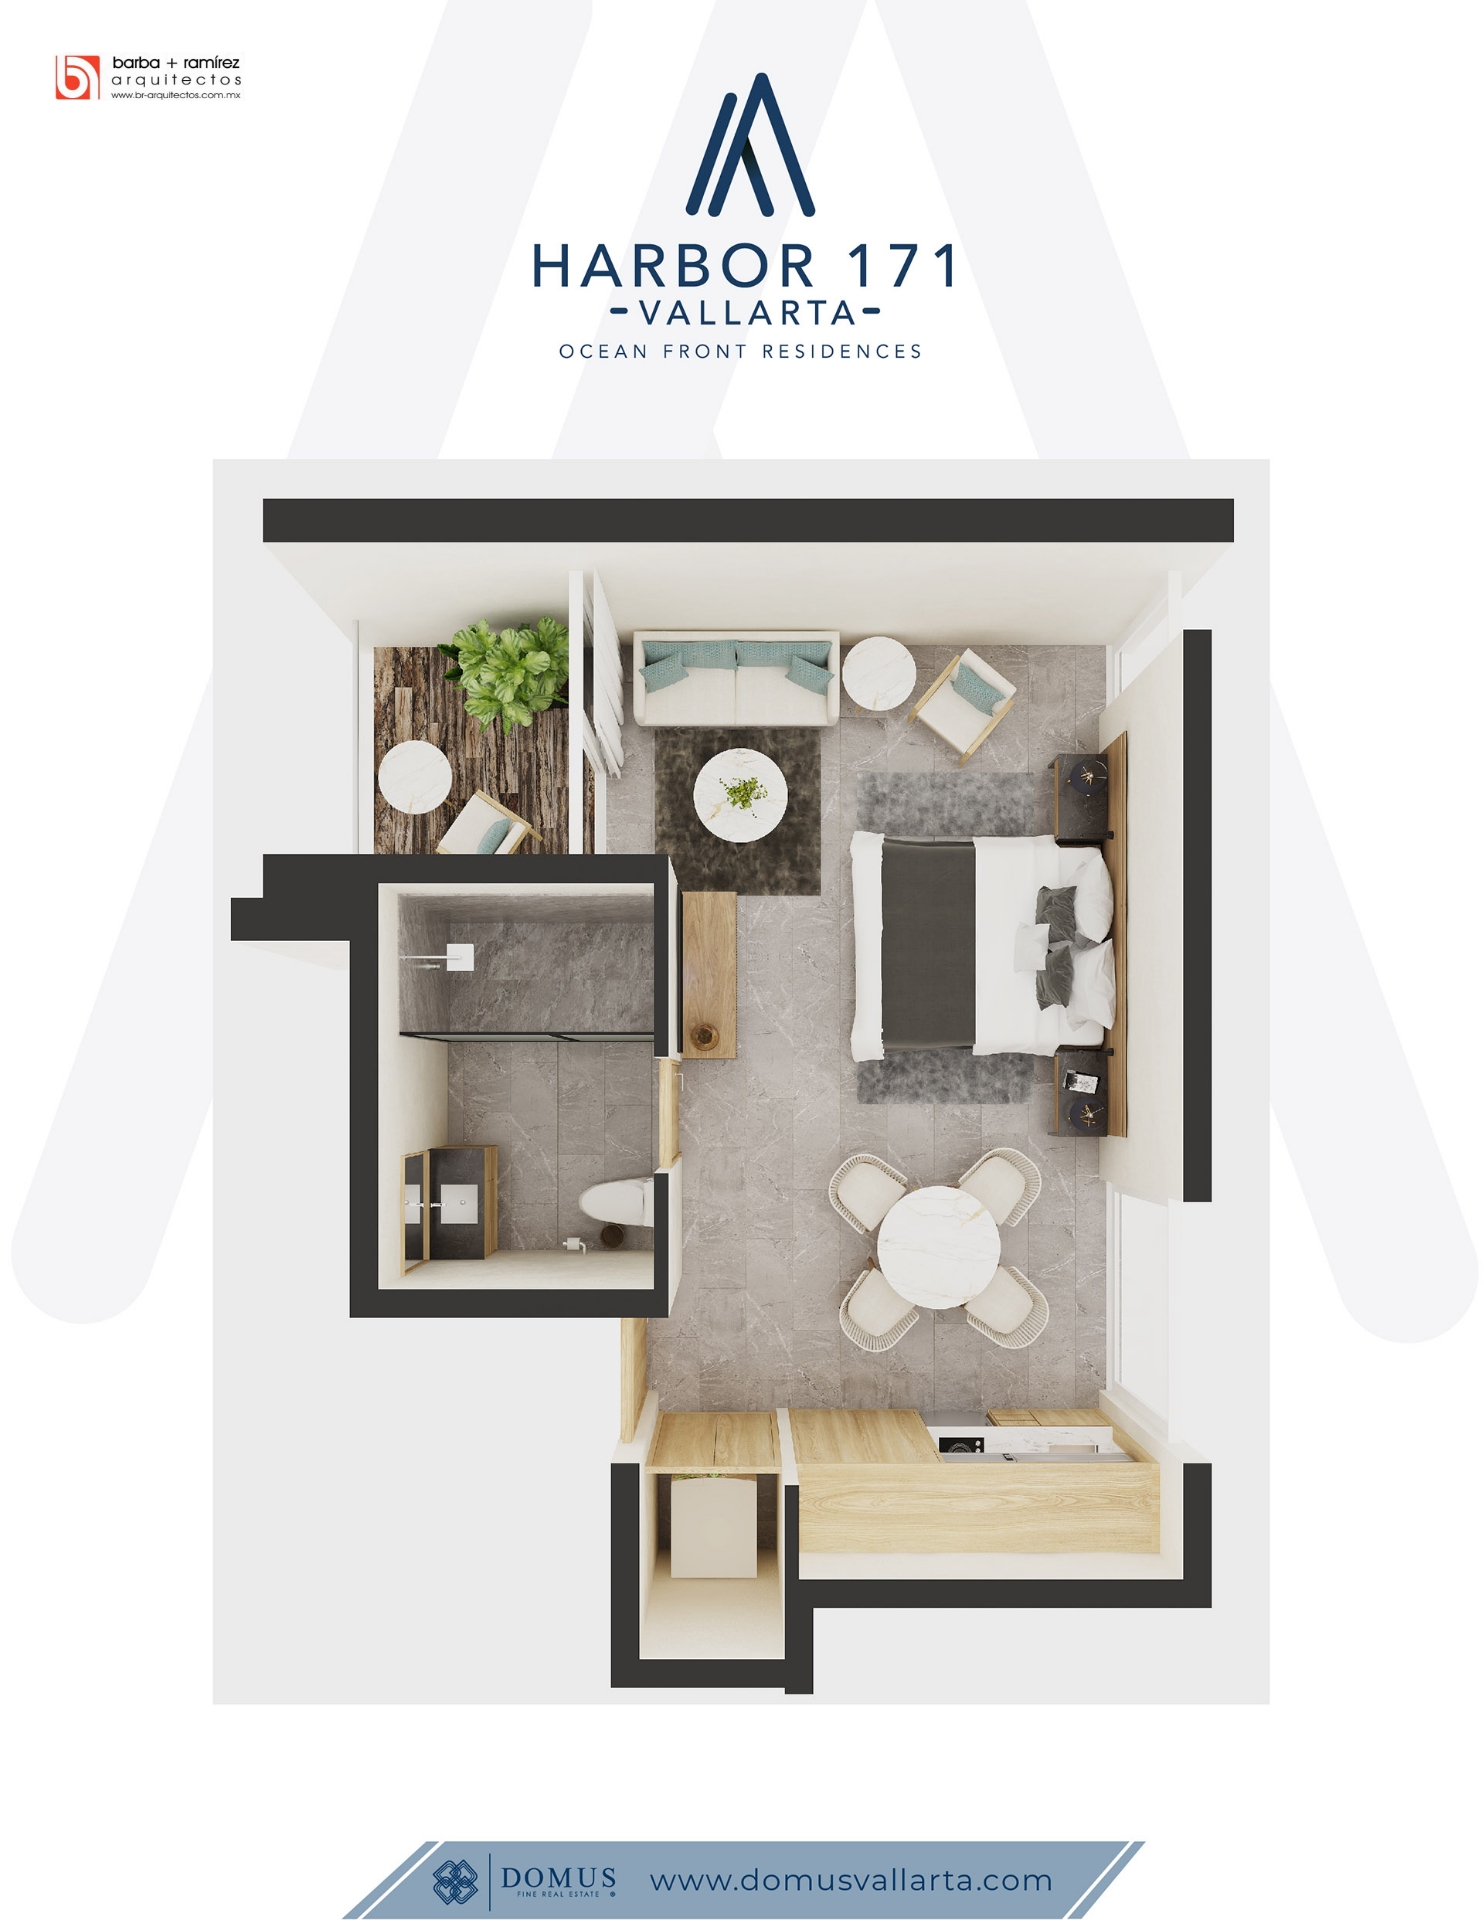 Unit 2510 Blueprint - Harbor 171